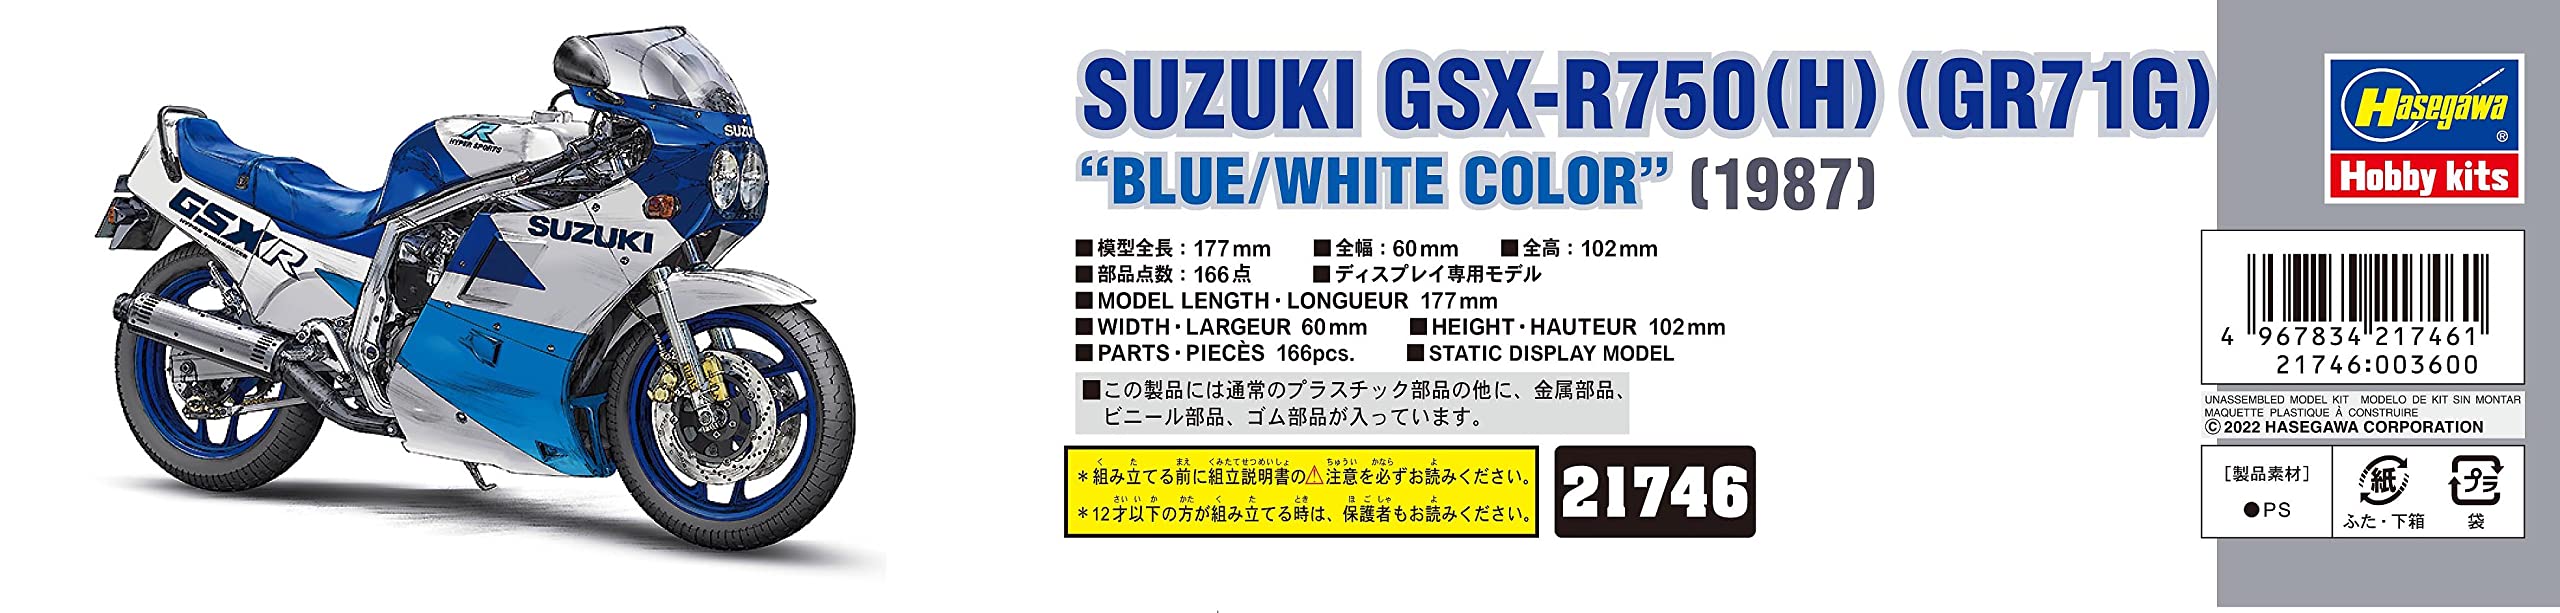 Hasegawa 1/12 SUZUKI GSX-R750 H GR71G BLUE/WHITE COLOR Plastic model kit 21746_3